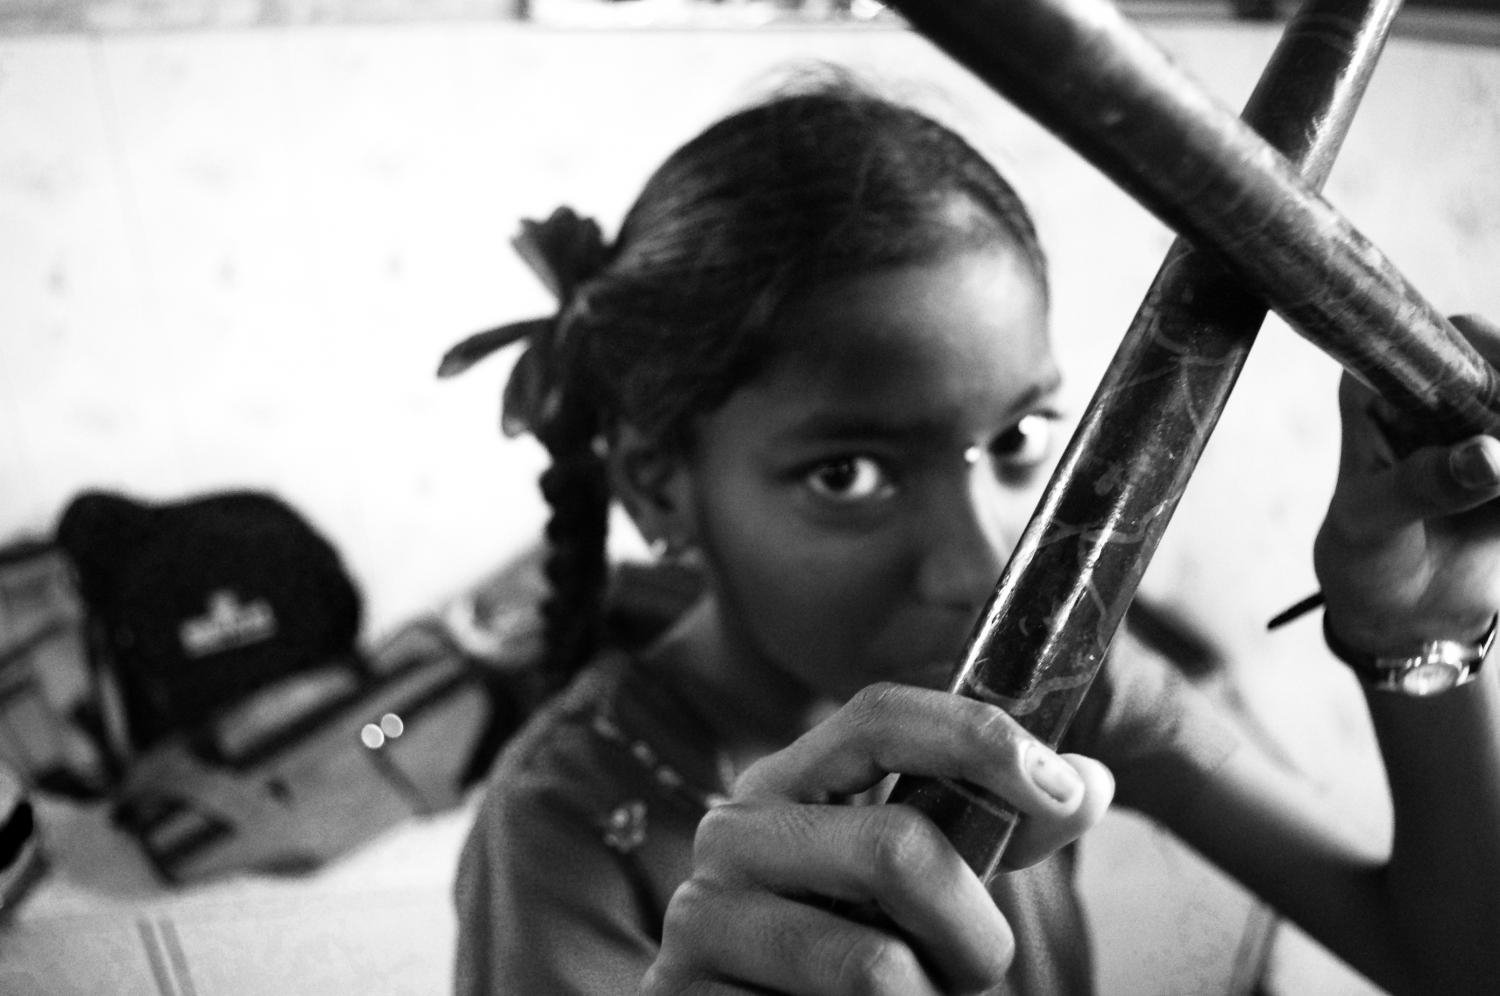 %0AA+group+called+Cati-patang-poeira+teaches+capoeira%2C+a+playful+Brazilian+martial+art%2C+to+kids+in+the+Bainganwadi+slum+in+Mumbai.